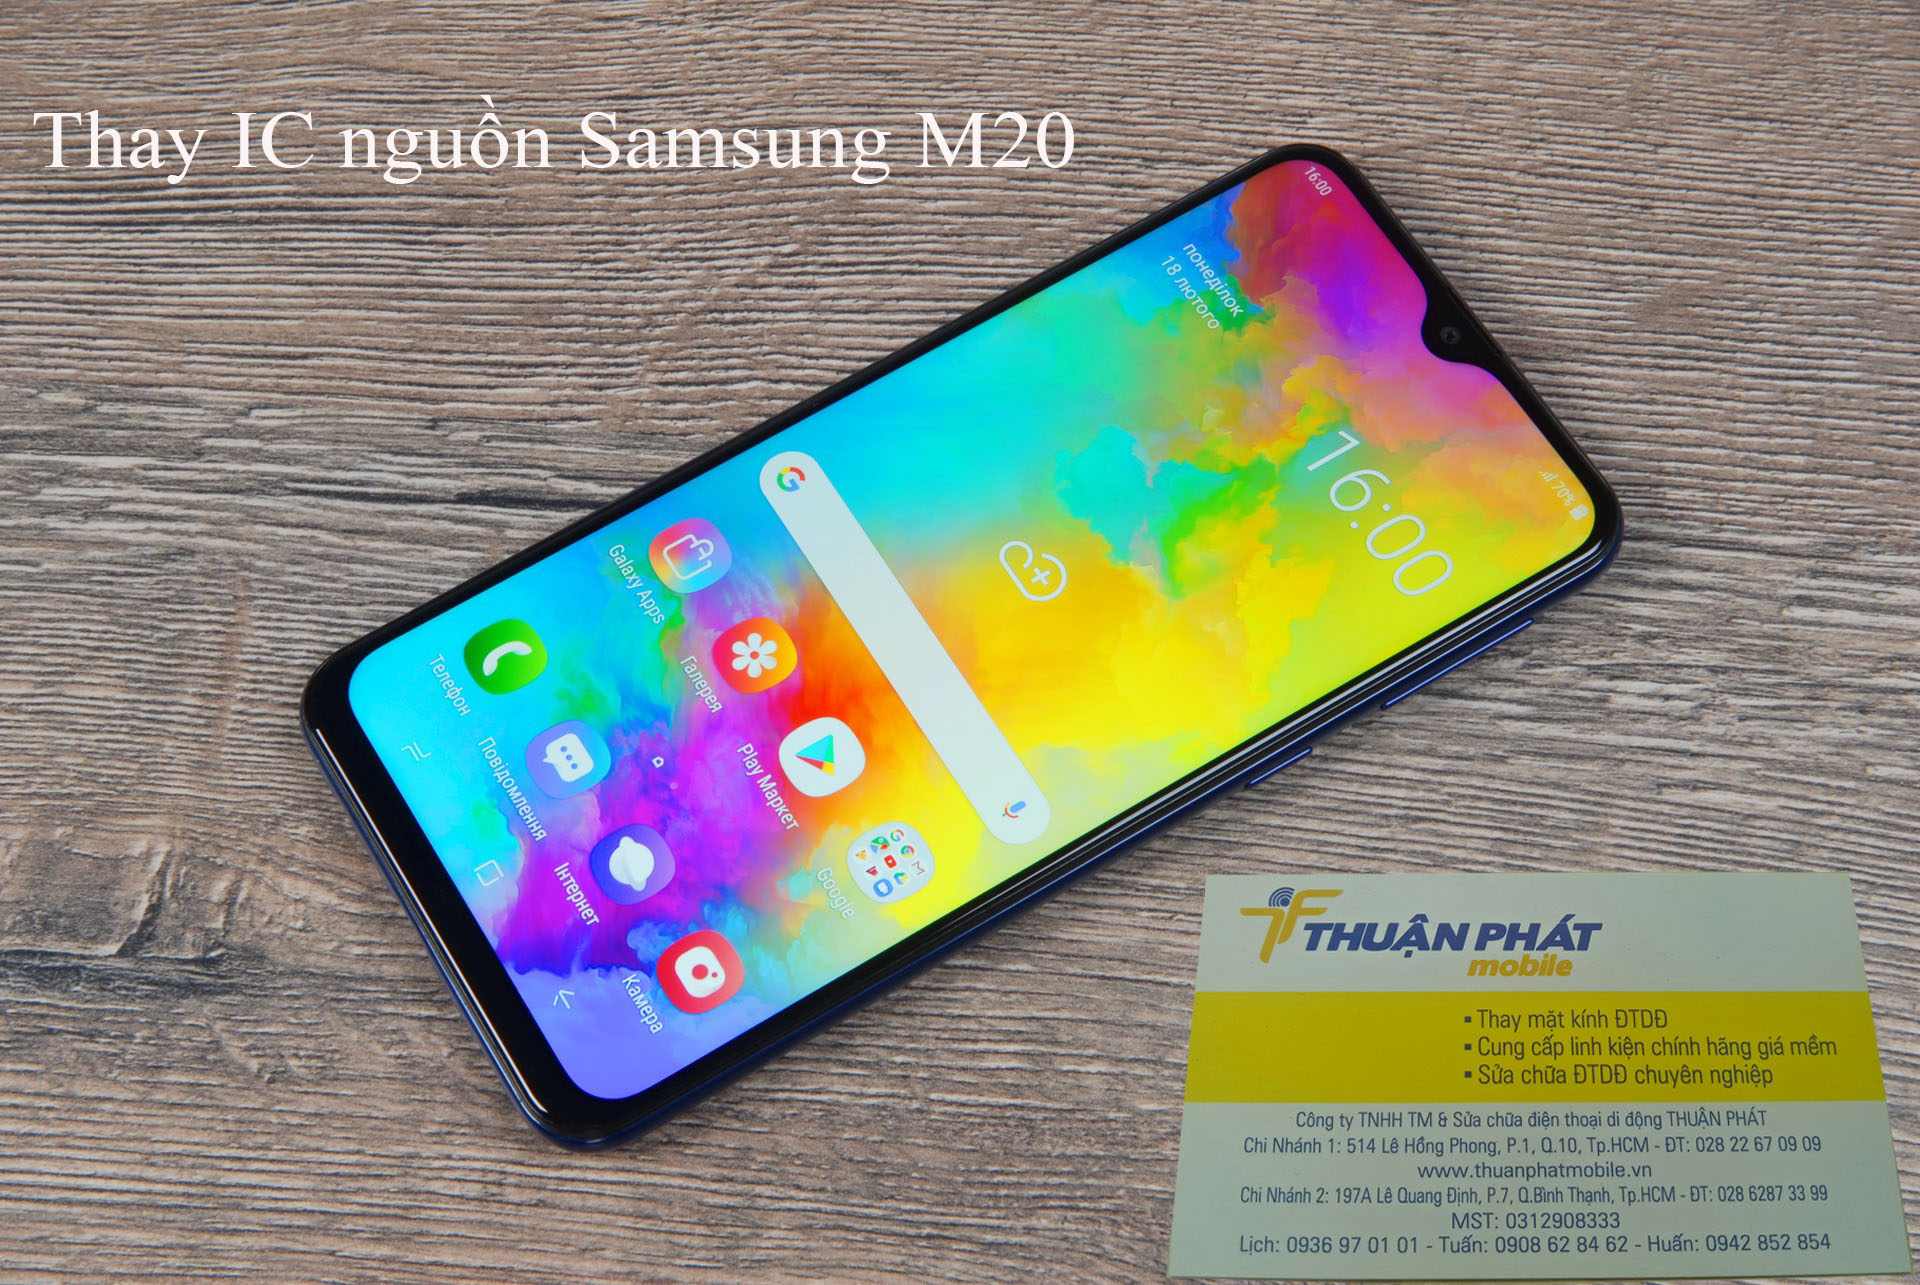 Thay IC nguồn Samsung M20 tại Thuận Phát Mobile